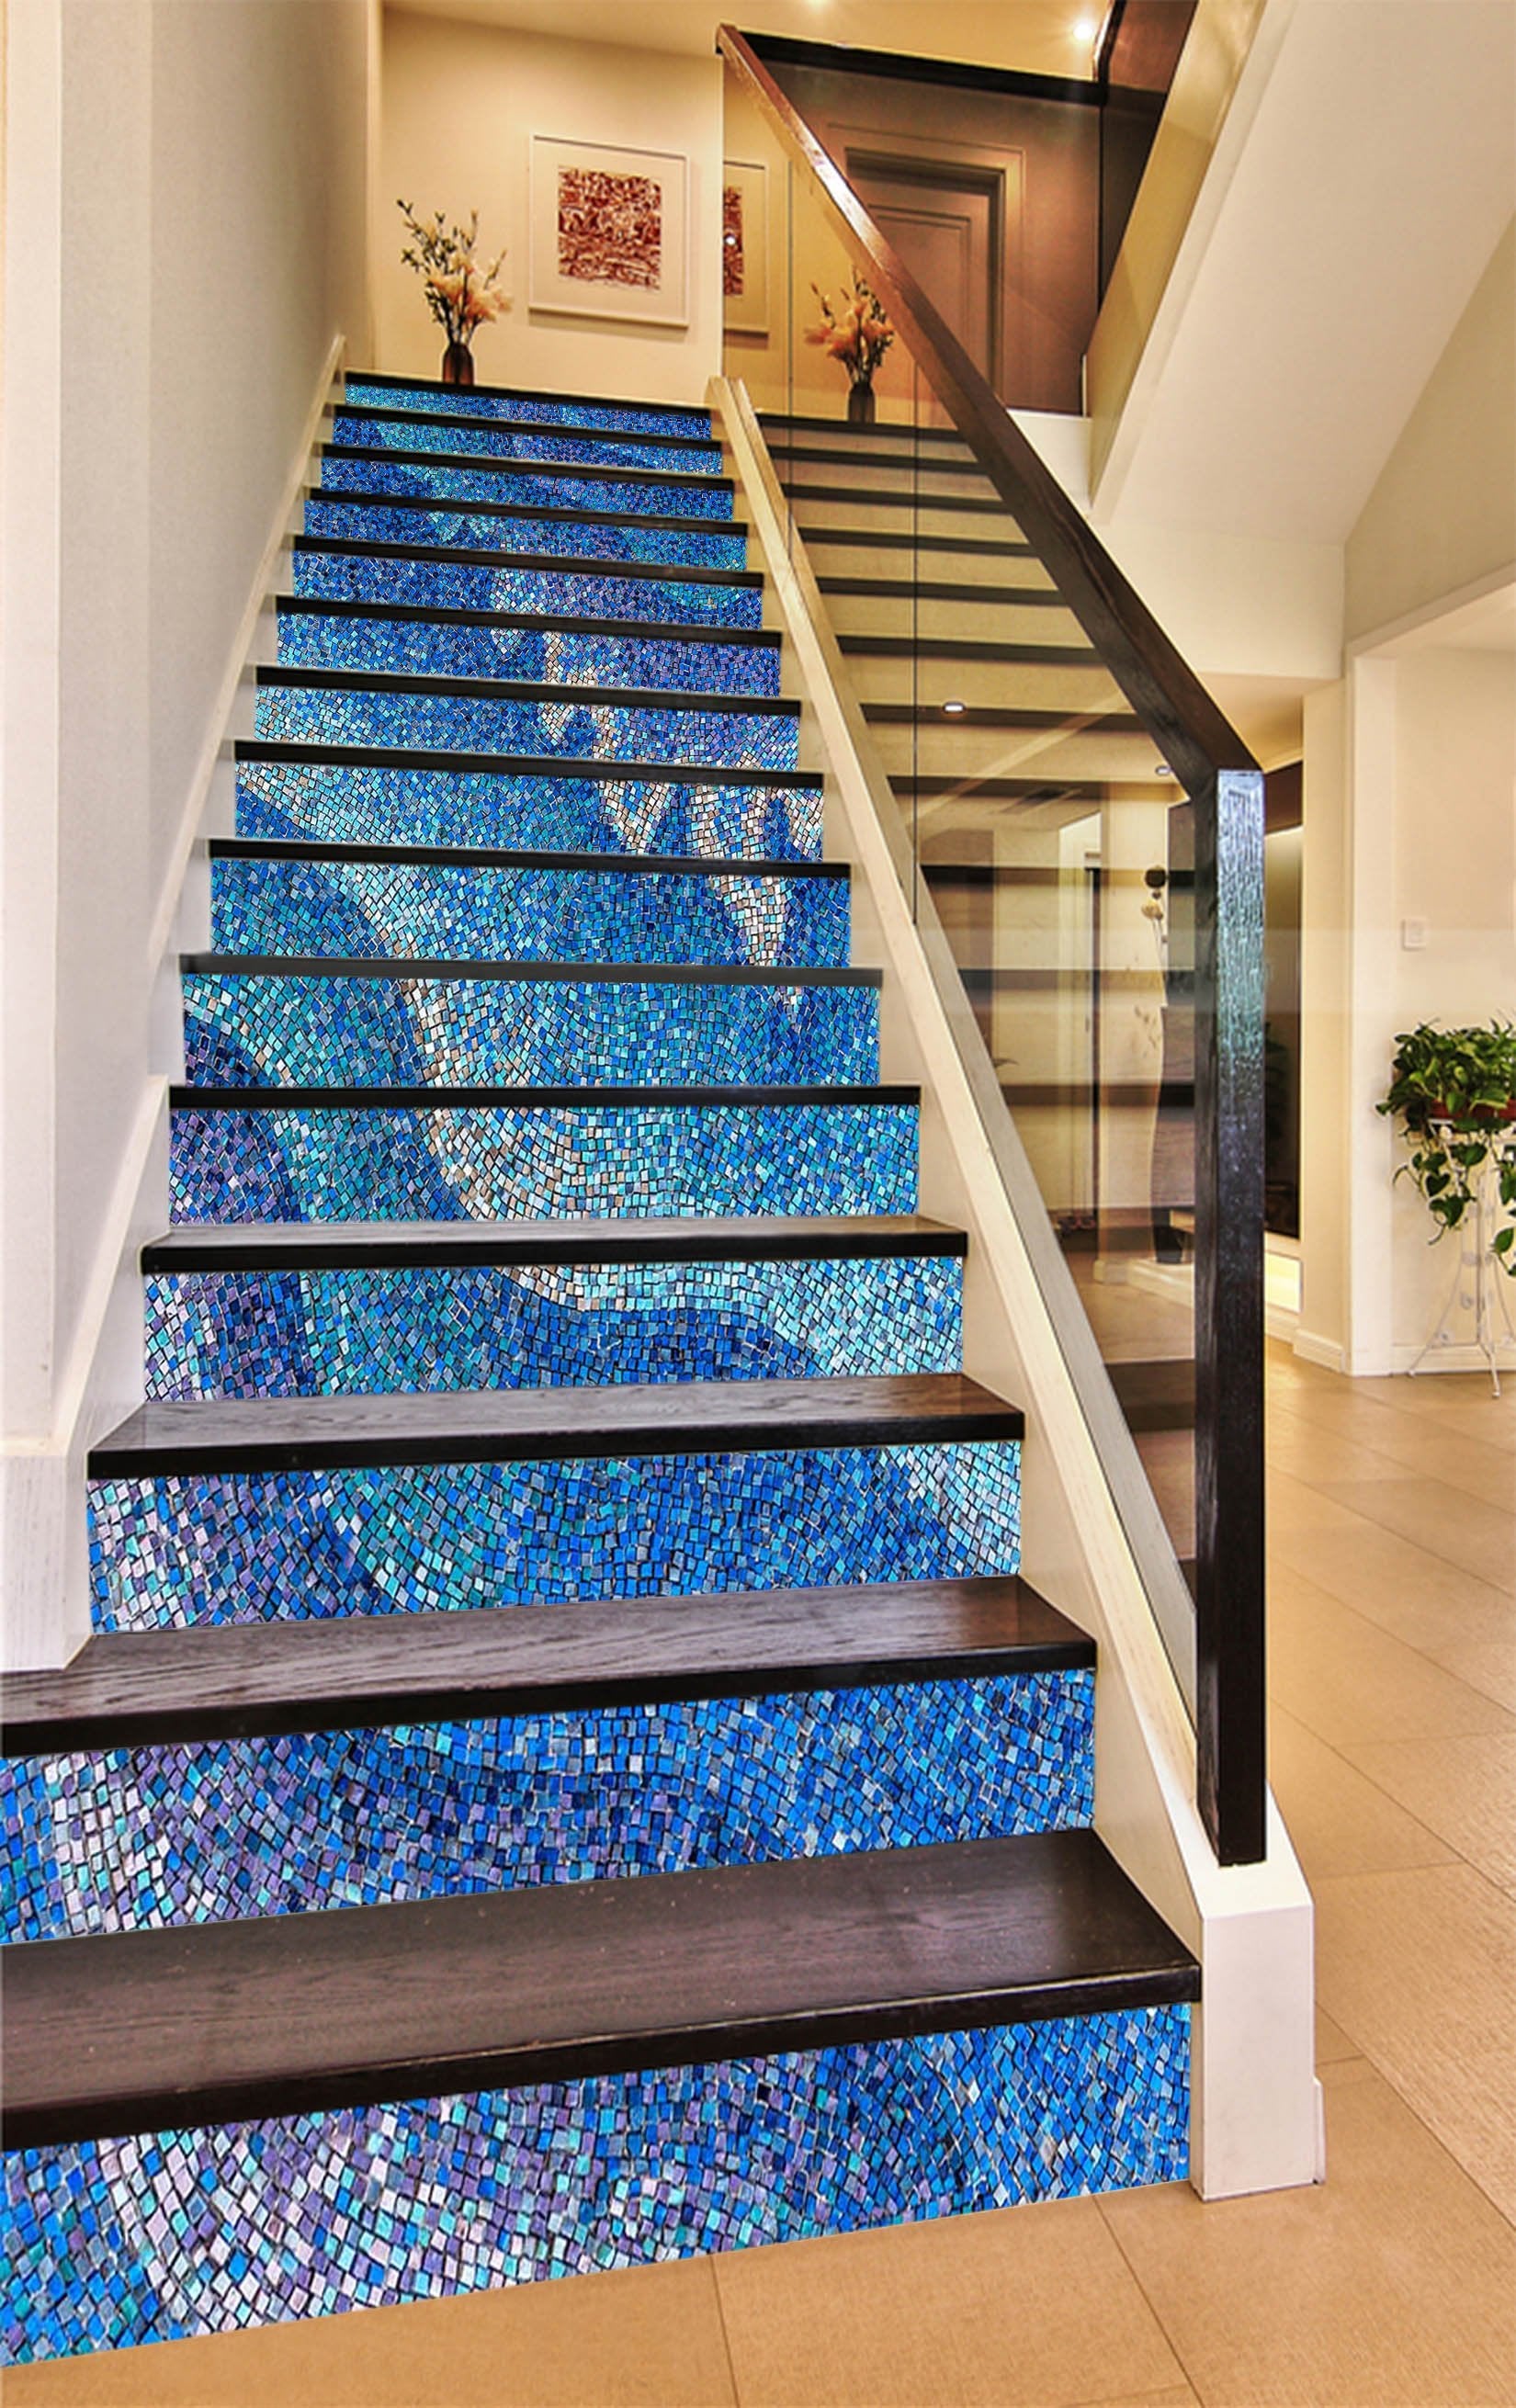 3D Blue River 720 Marble Tile Texture Stair Risers Wallpaper AJ Wallpaper 